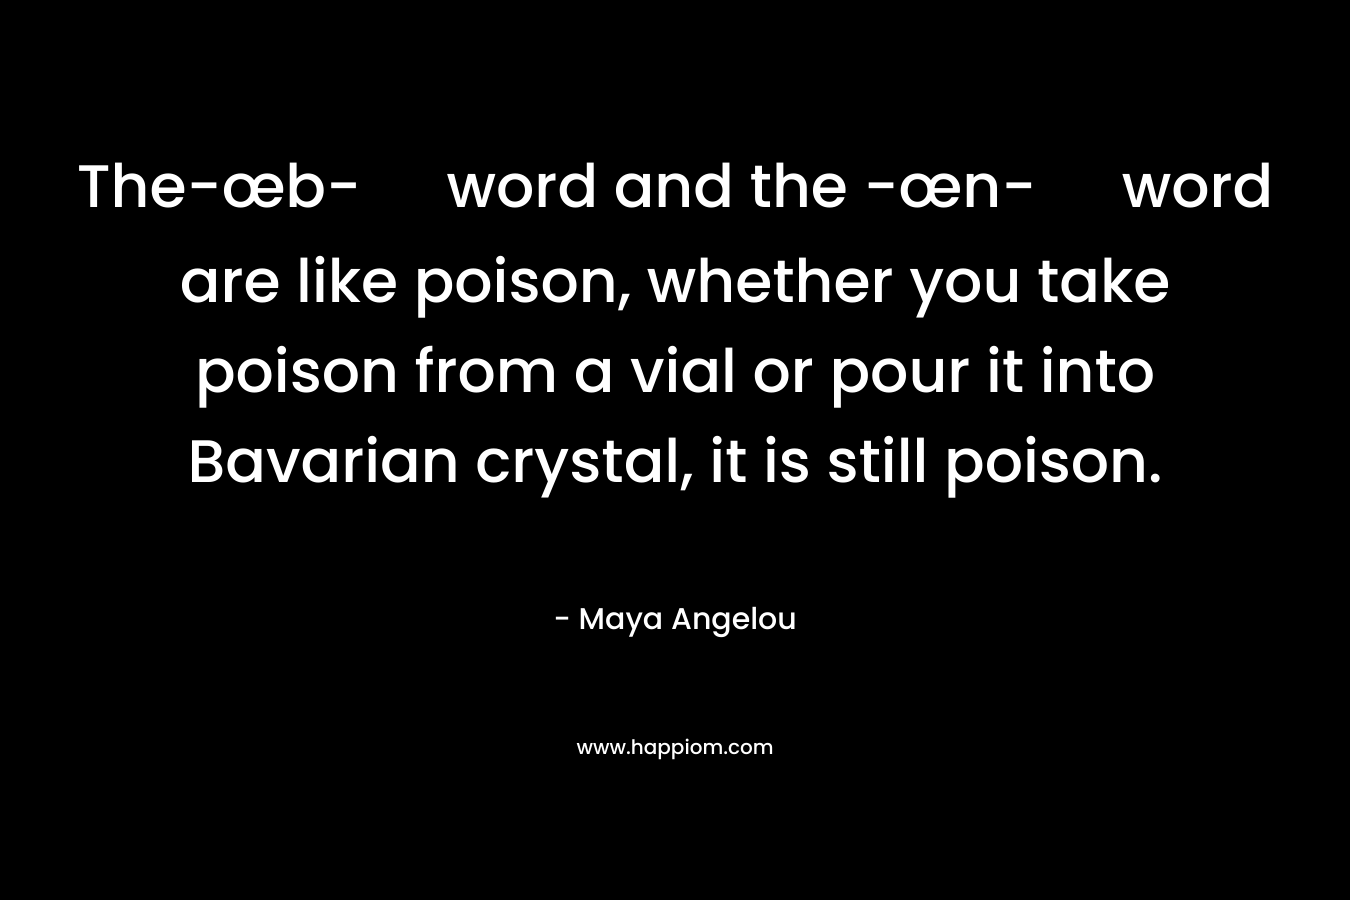 The-œb- word and the -œn- word are like poison, whether you take poison from a vial or pour it into Bavarian crystal, it is still poison.